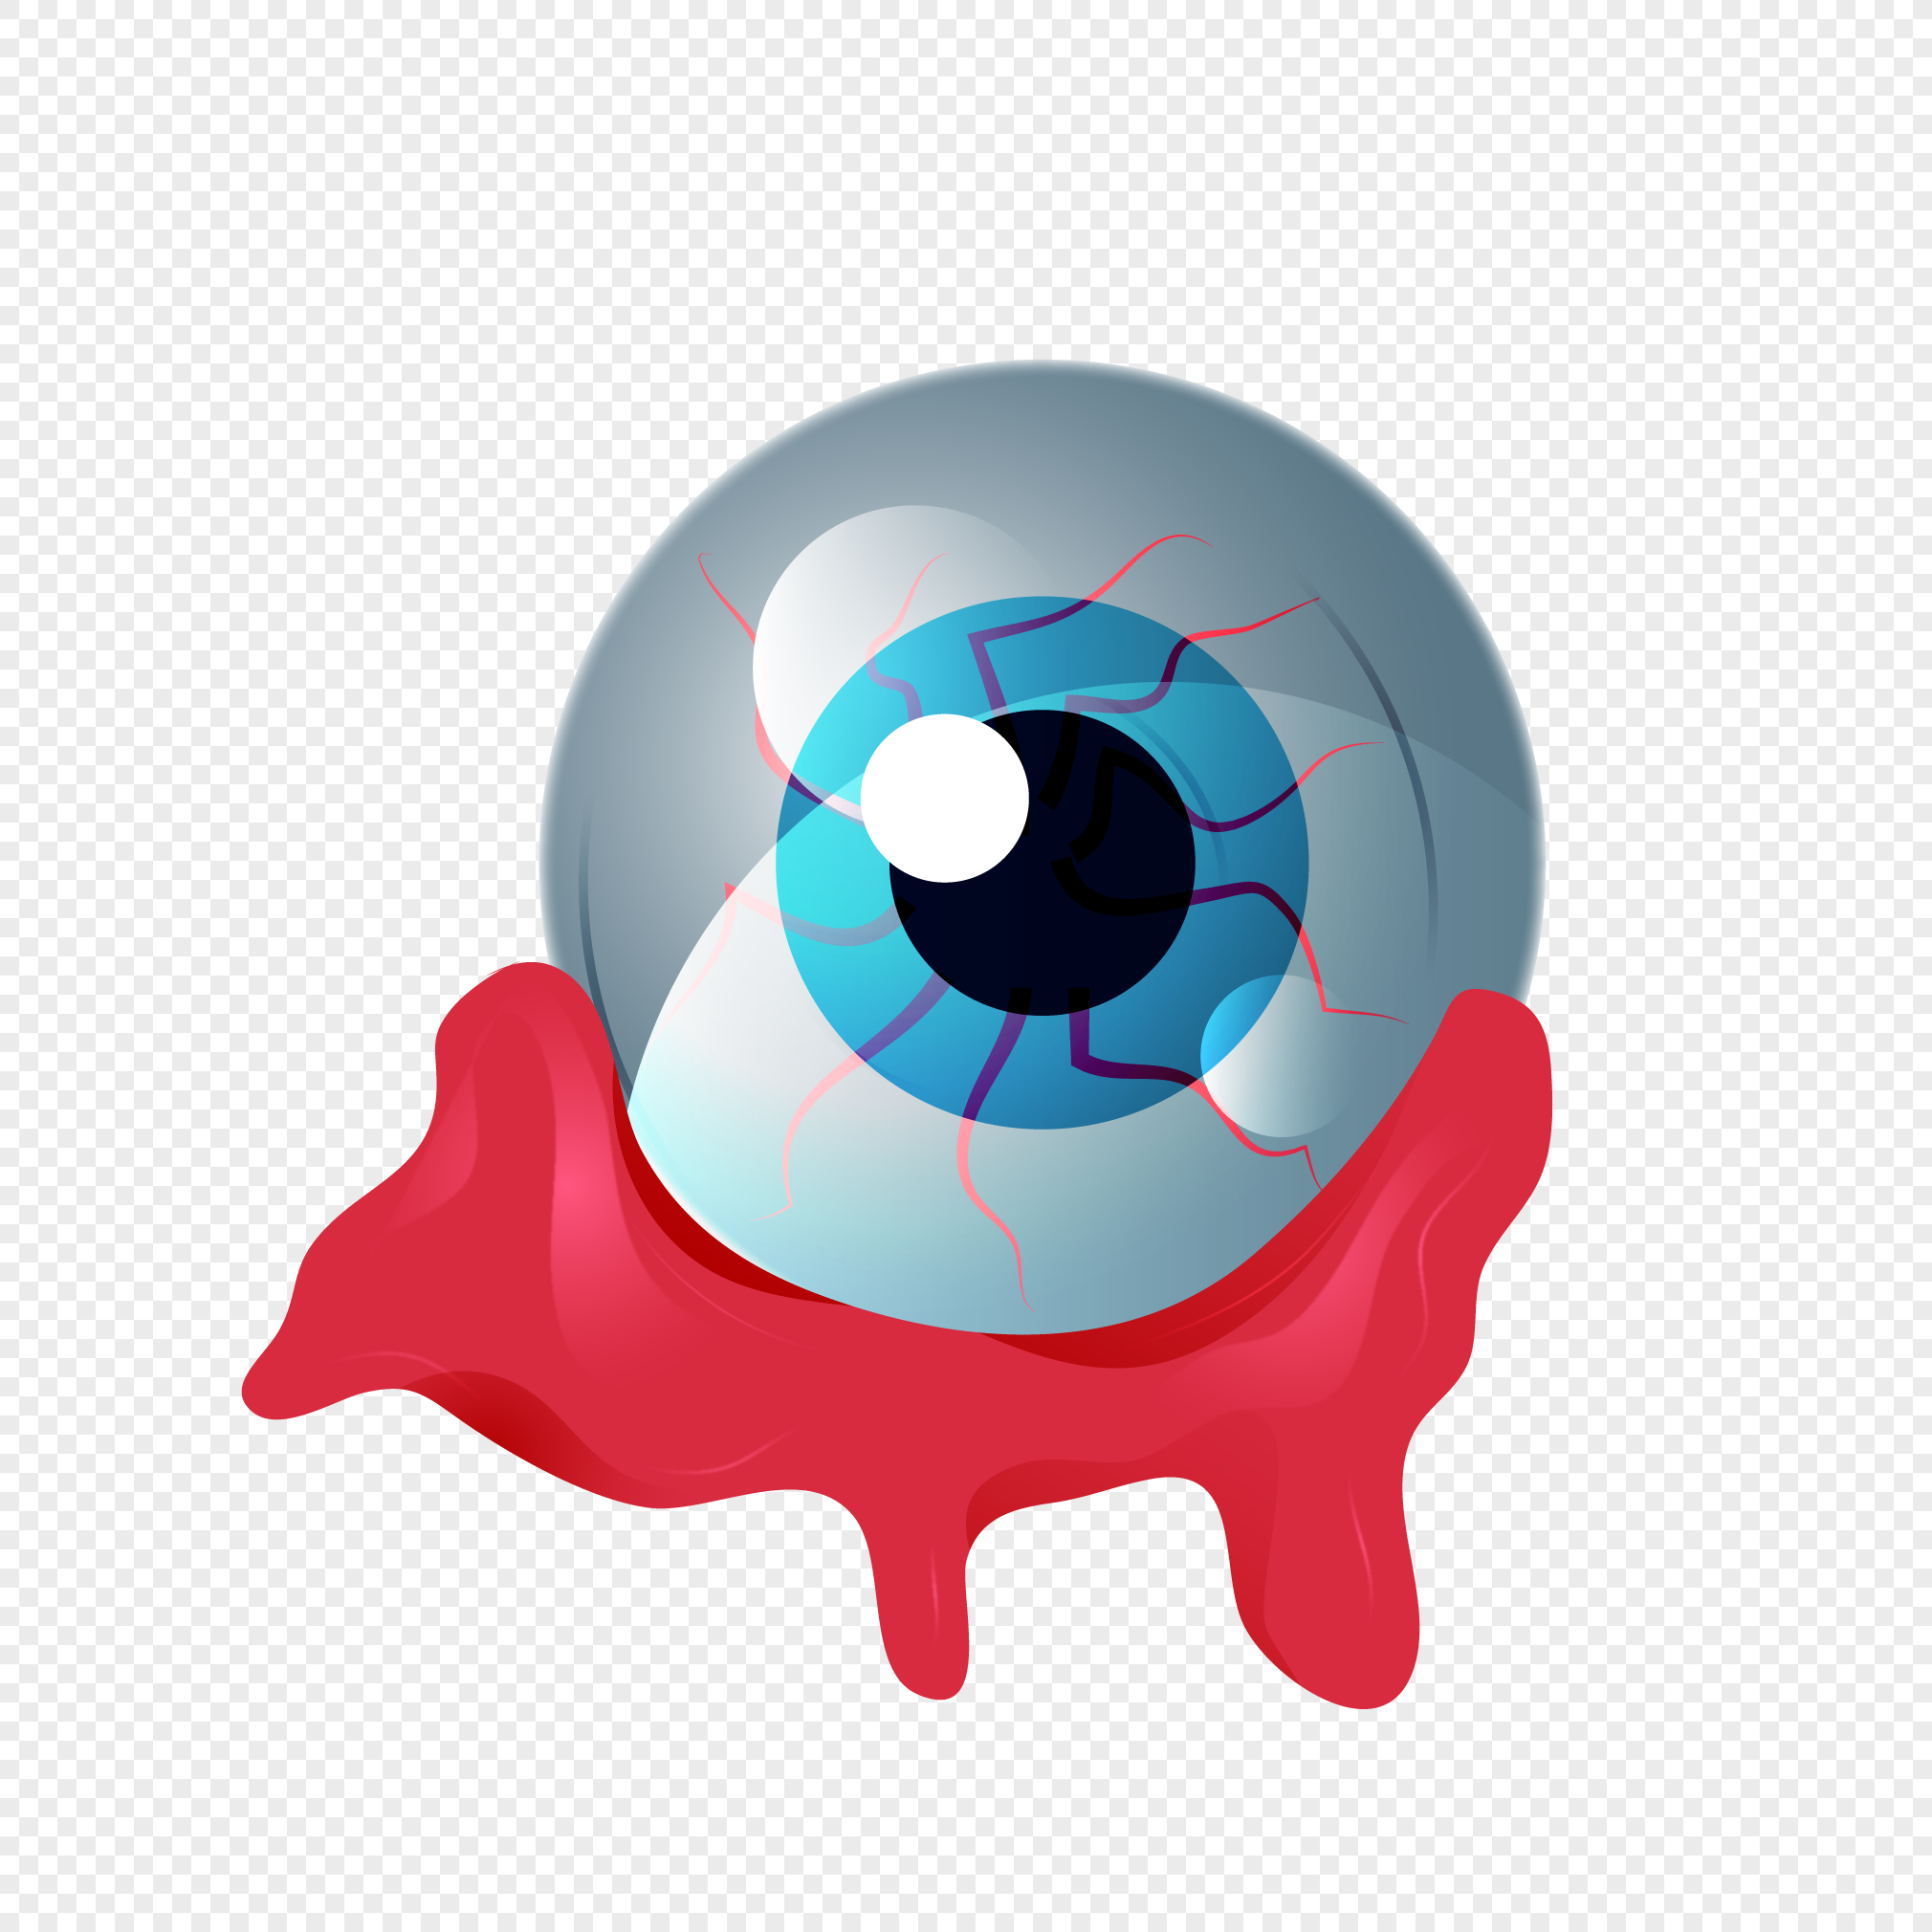 bloodshot eyeball vector